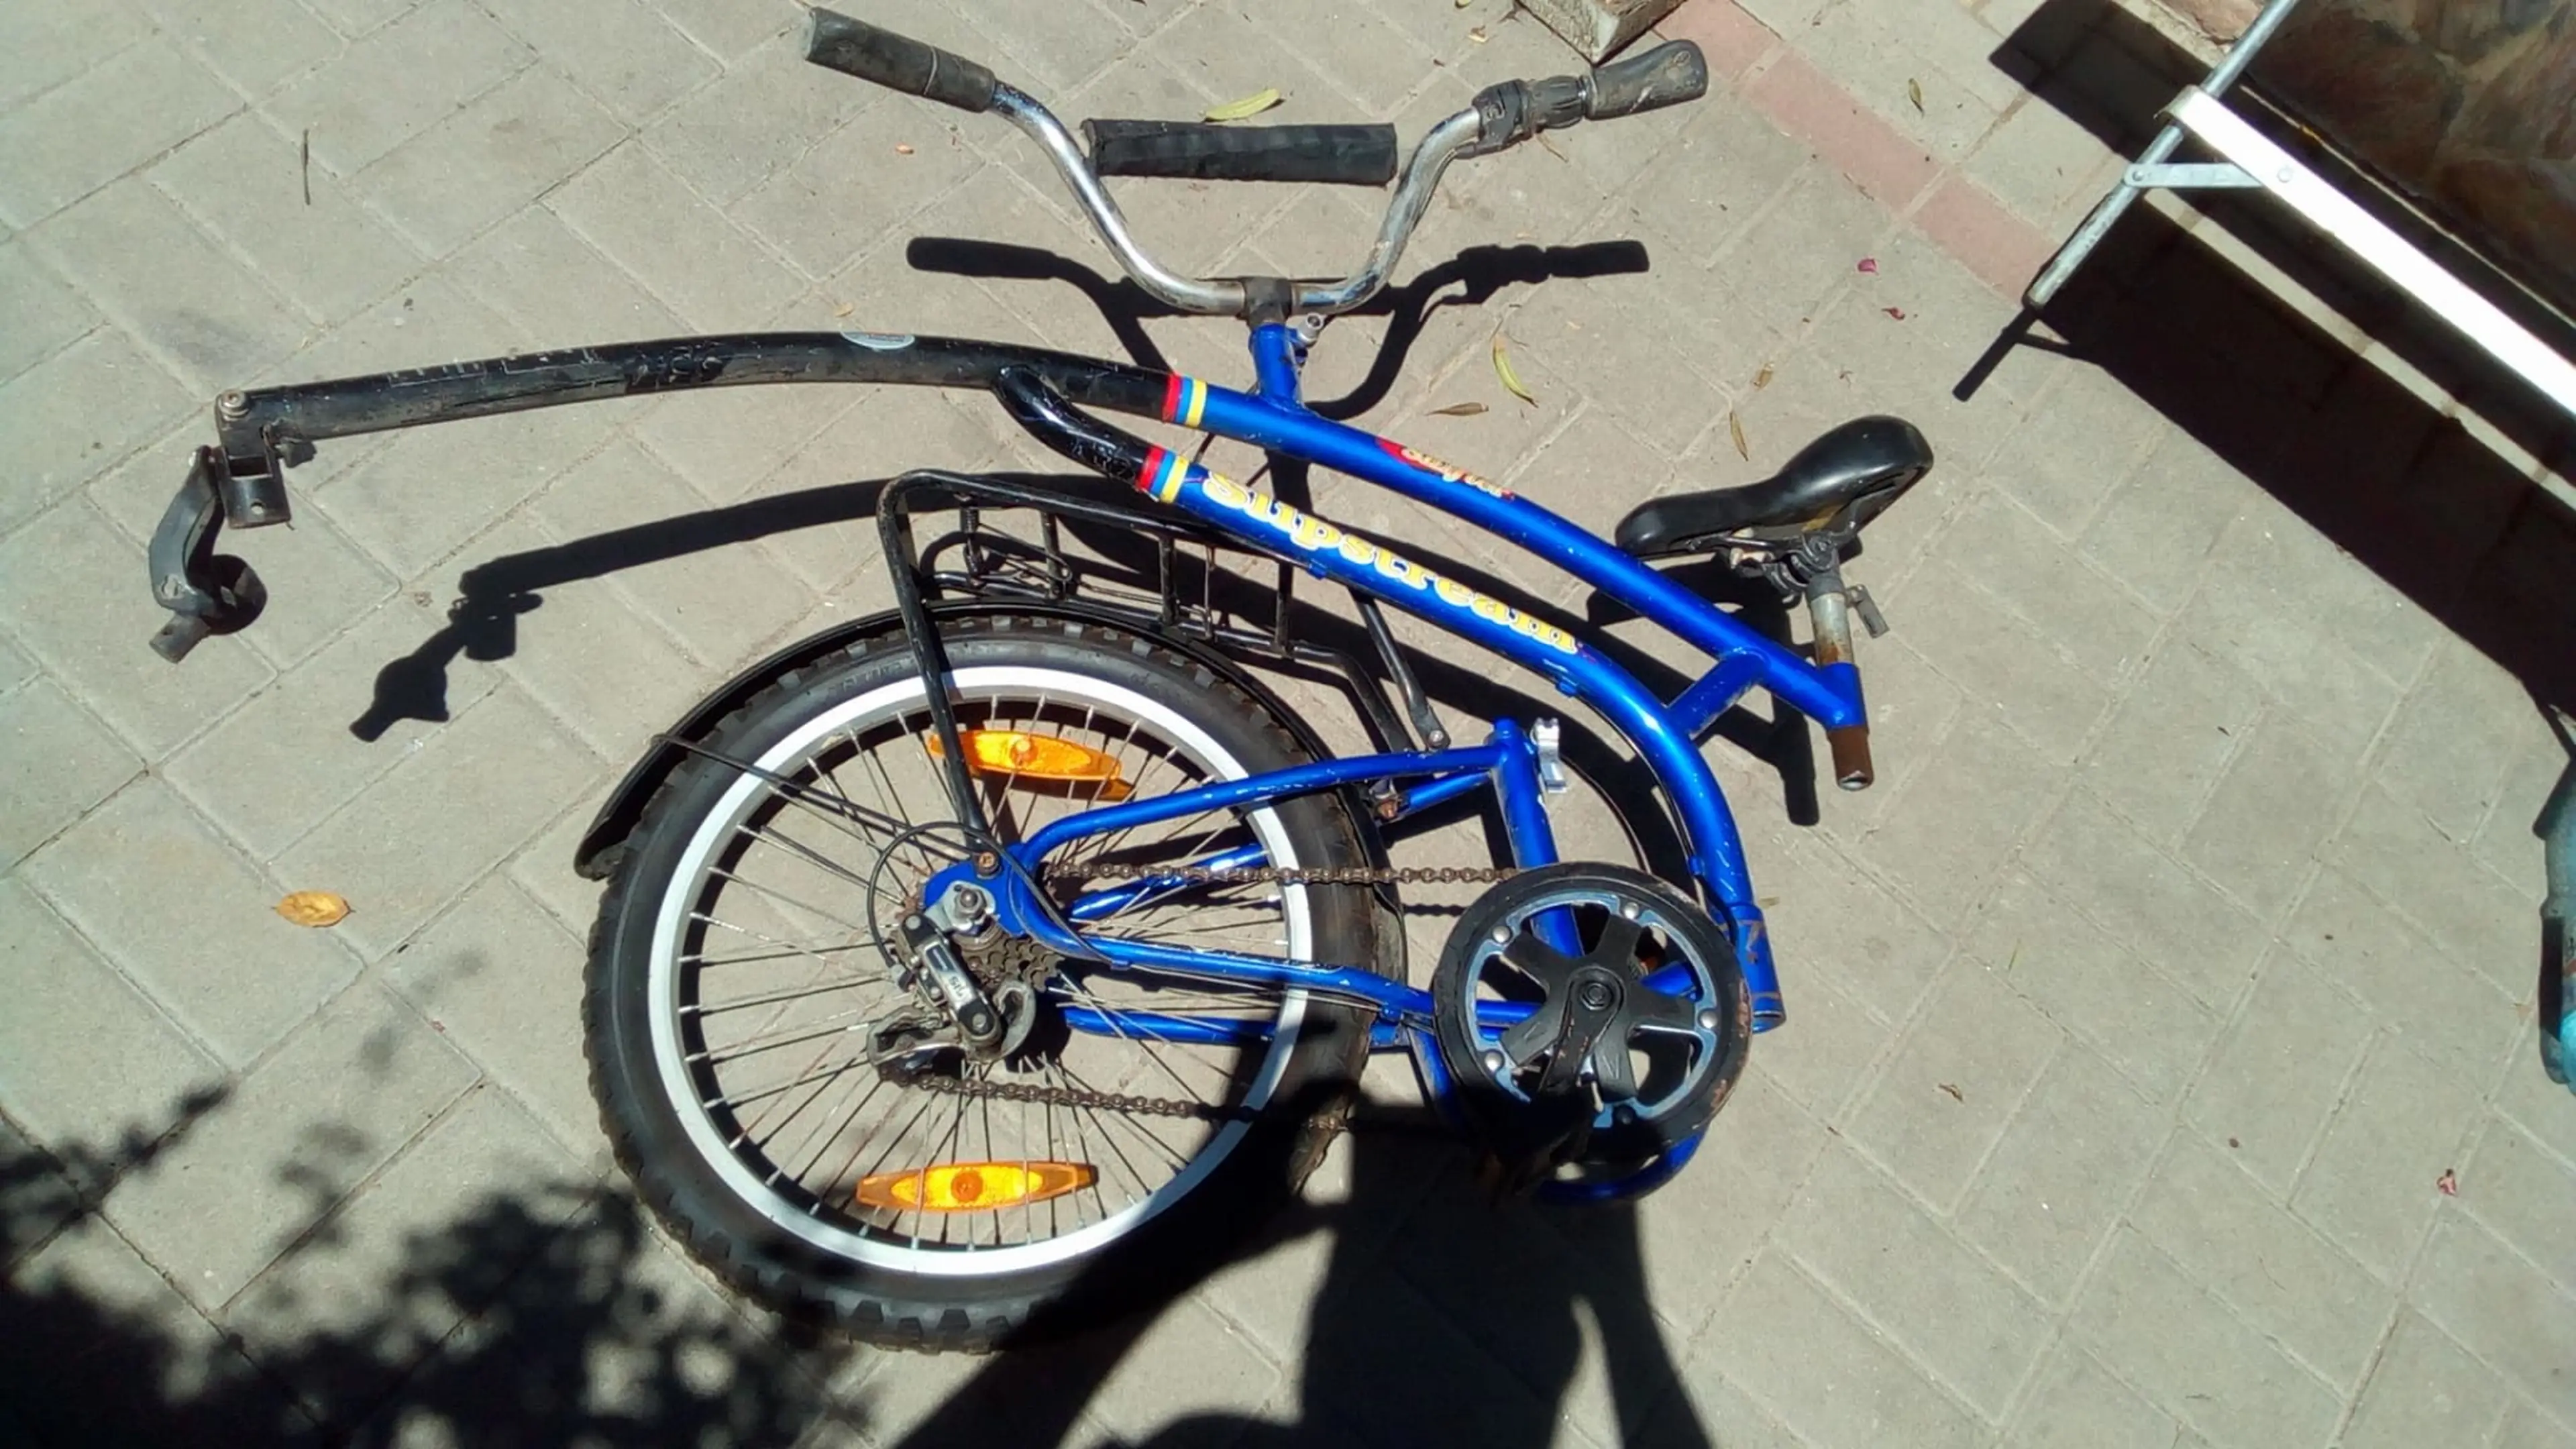 2. Bicicleta speciala.(Trail-A-Bike )